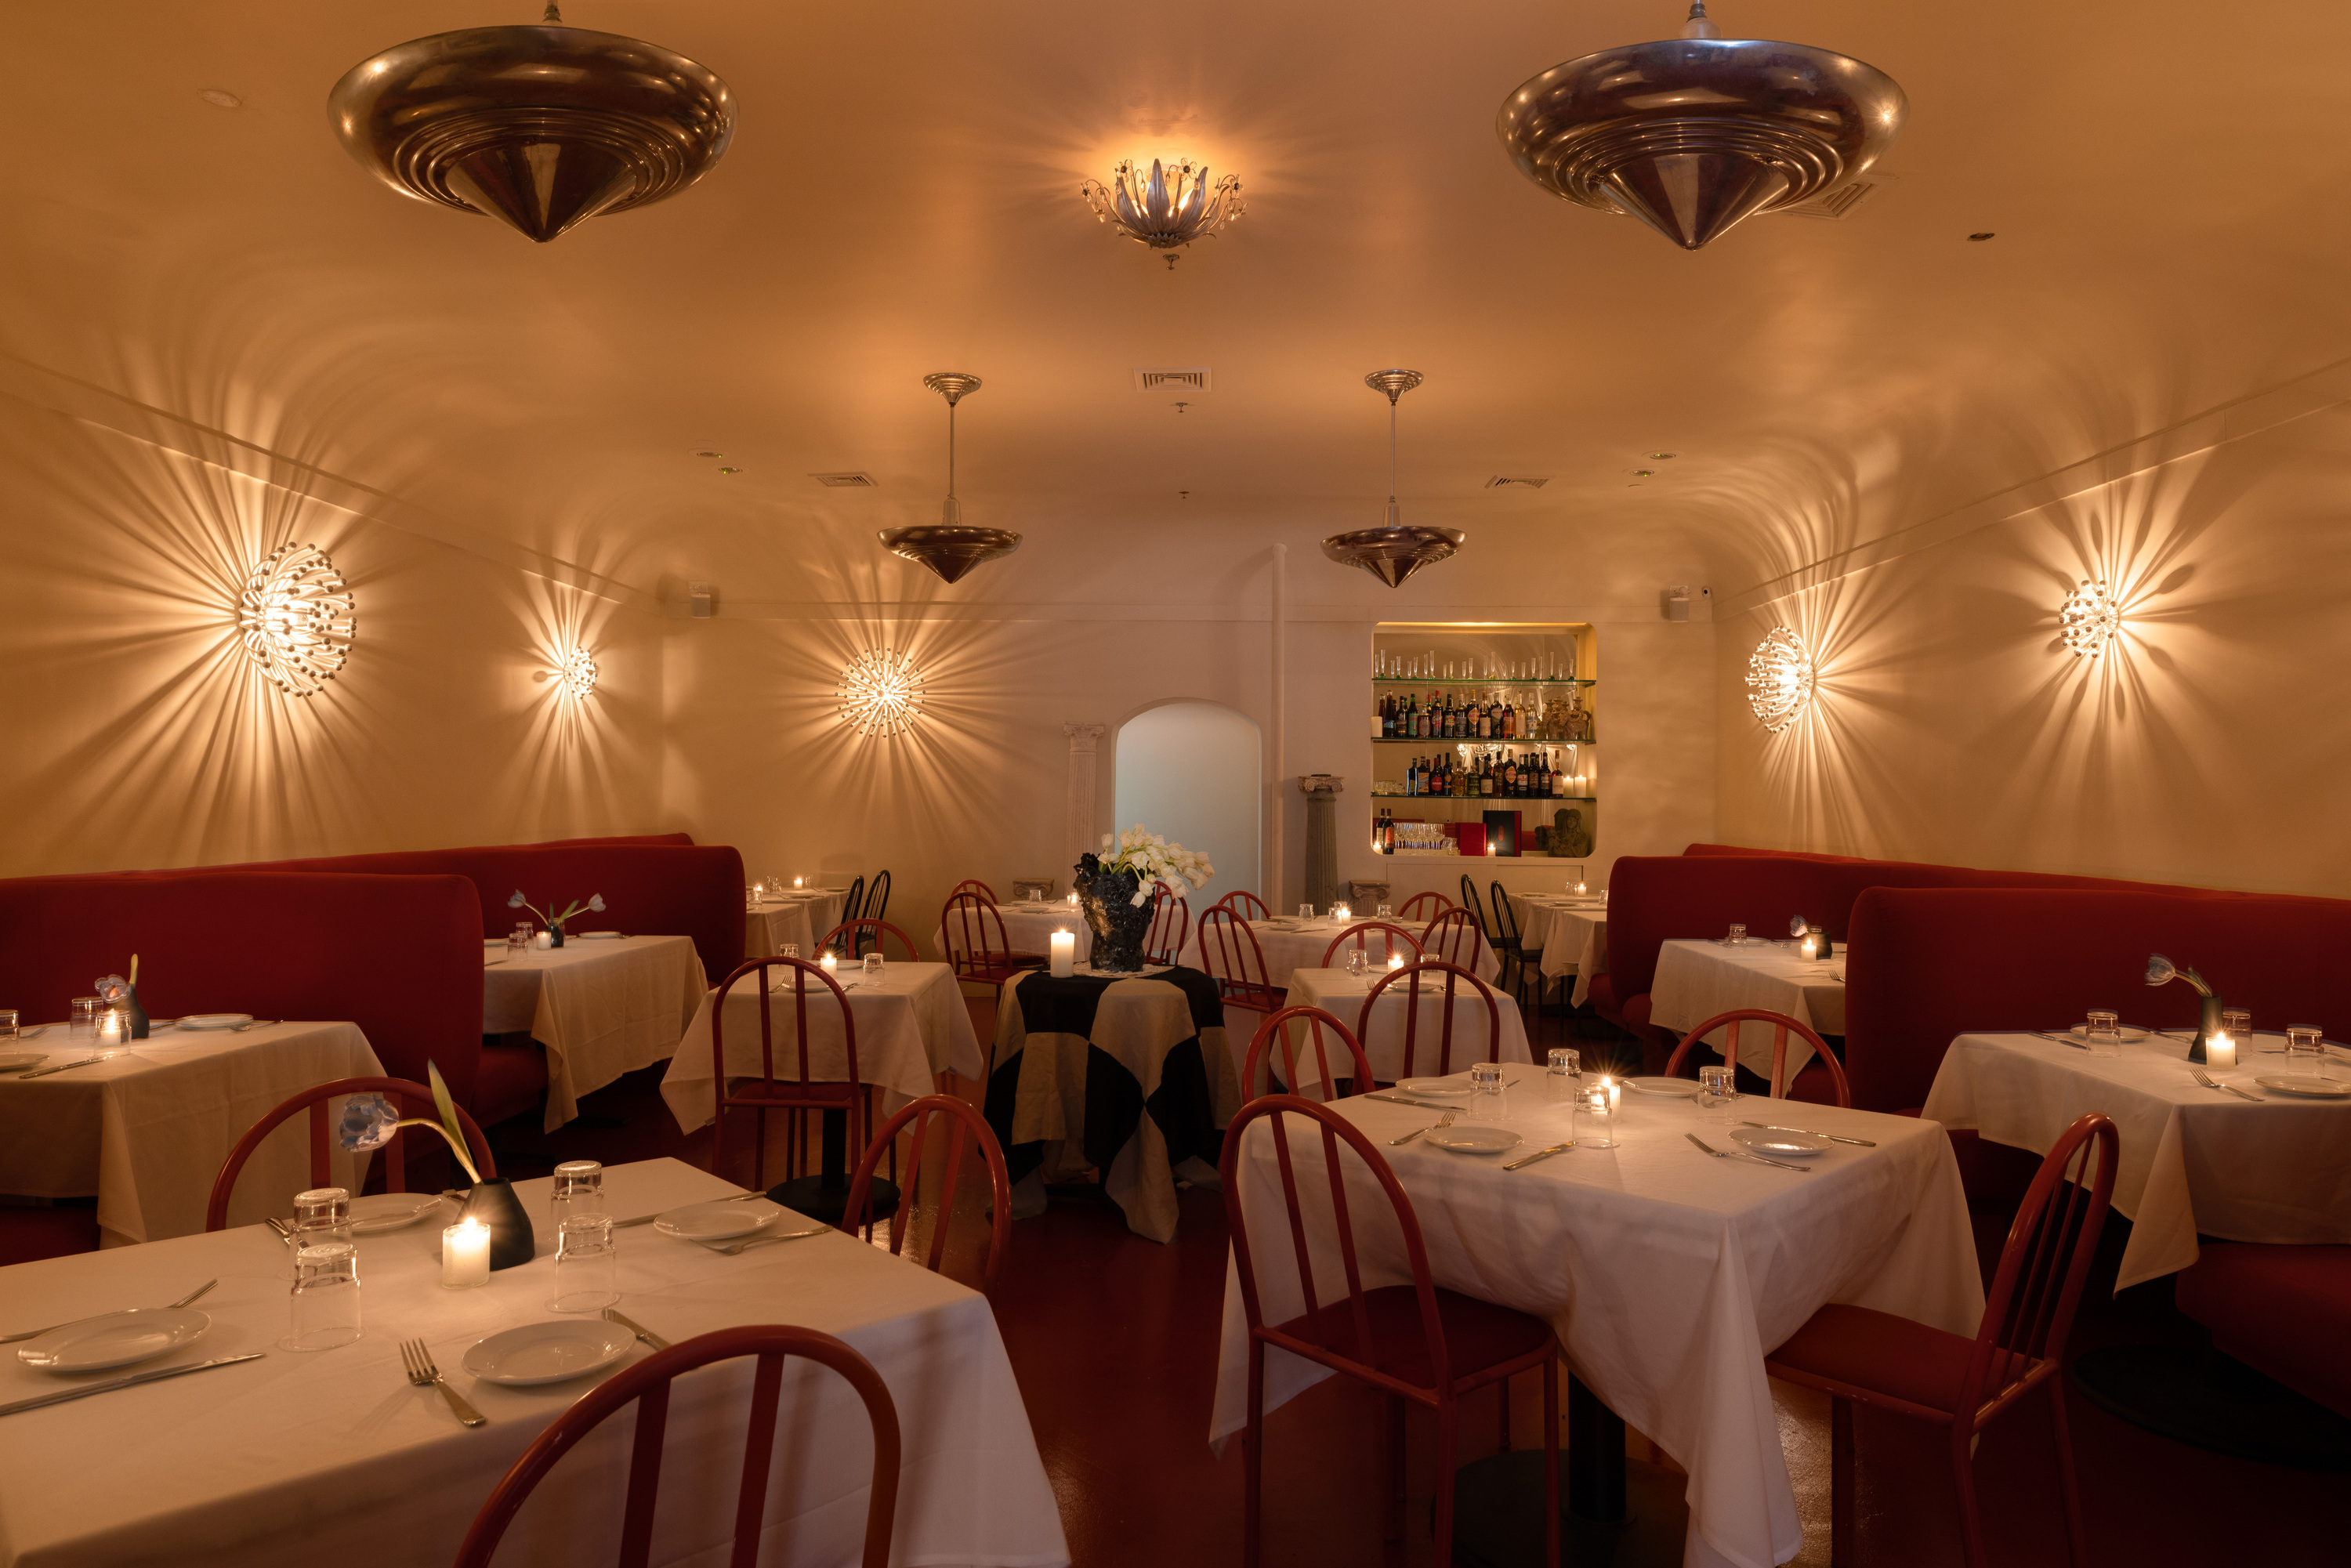 Restaurant Review: Casino is a northern Italian spot in Manhattan